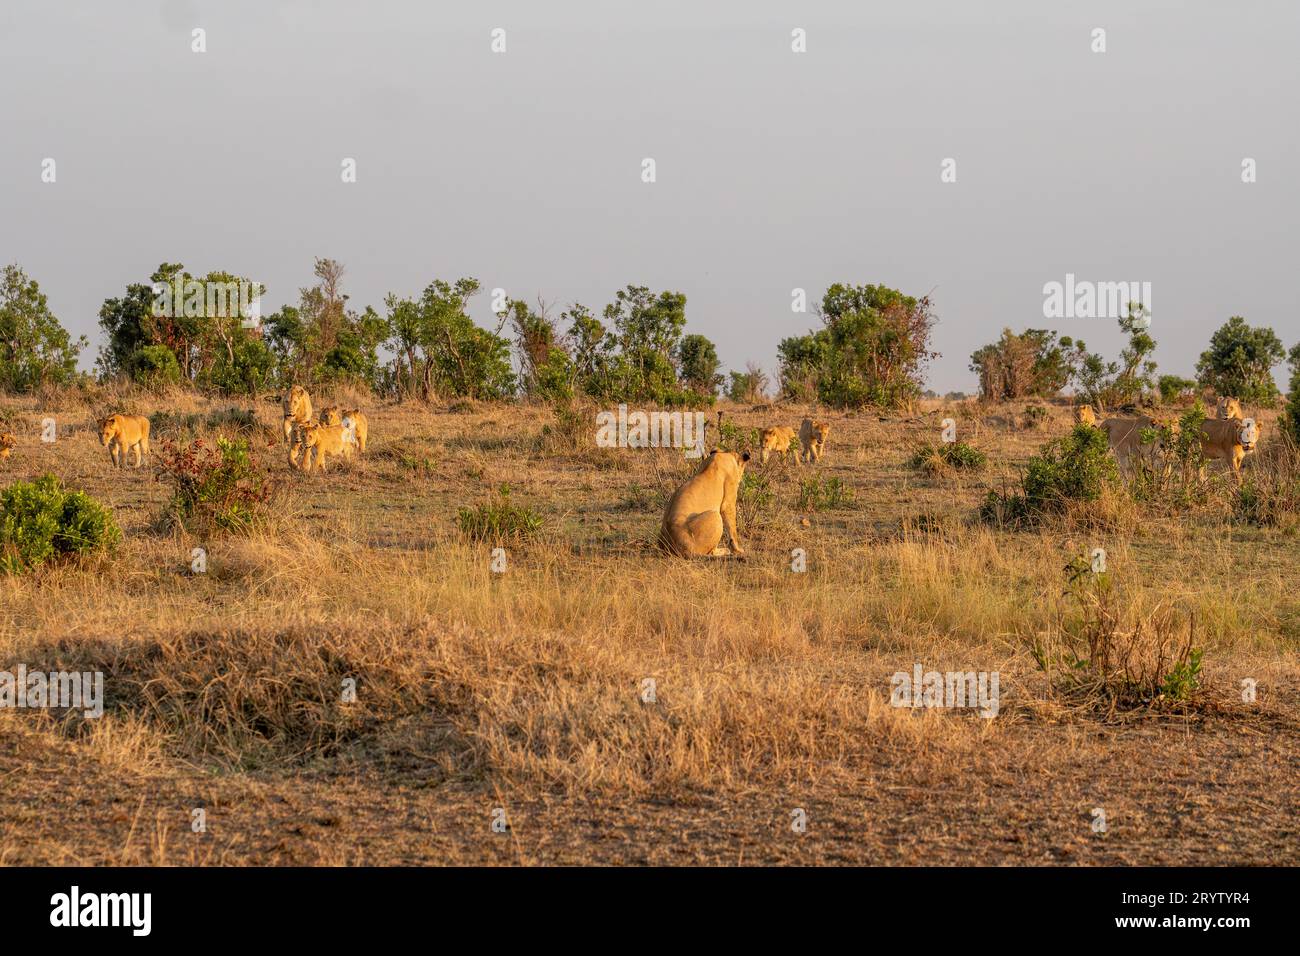 Lions in Masai Mara National Reserve Kenya Africa, Safari, Game drive Stock Photo